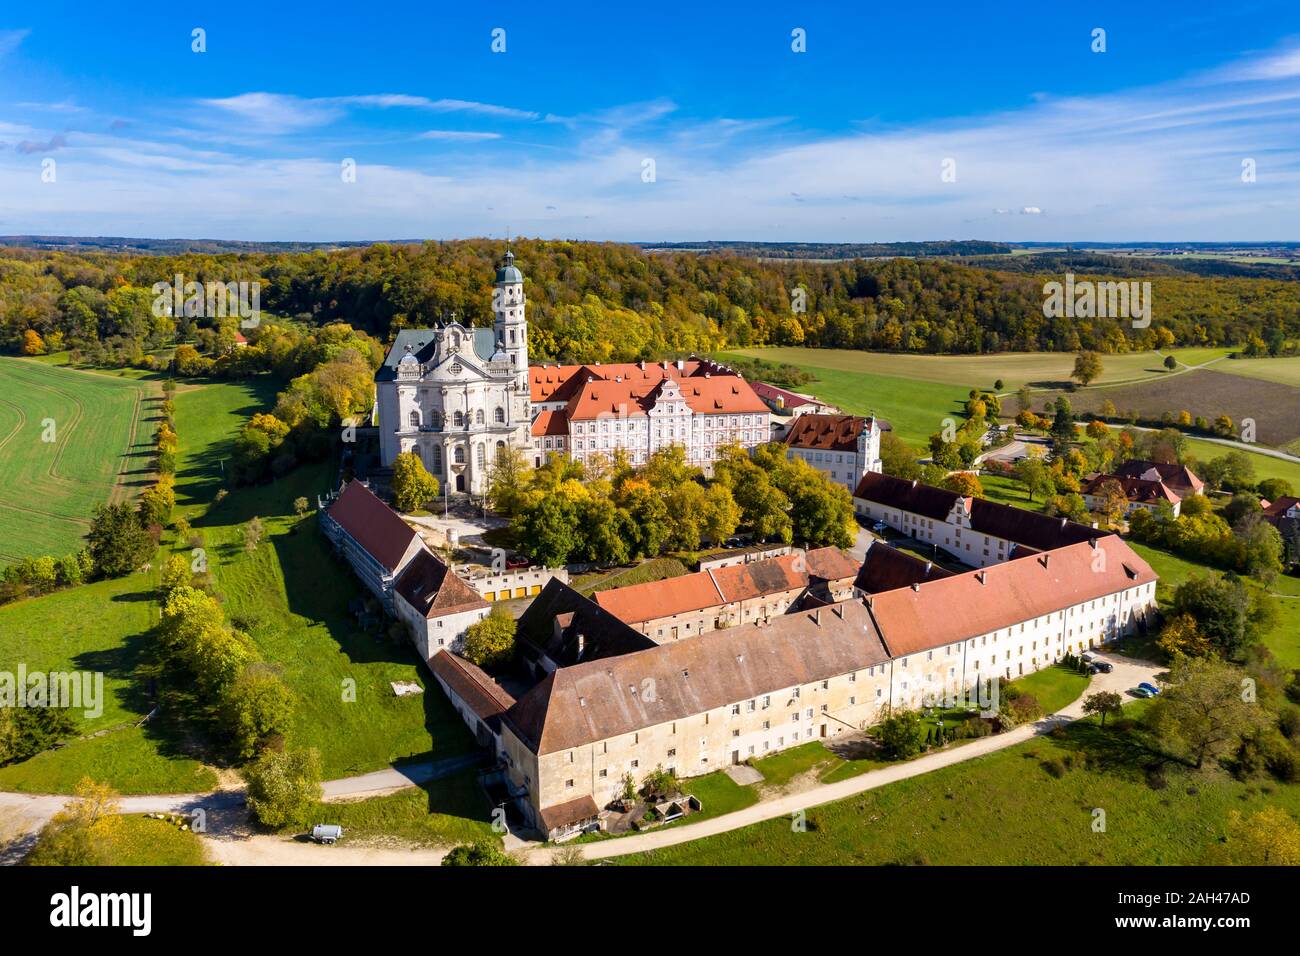 Germania Baden-Wuerttemberg, Neresheim, vista aerea del monastero benedettino, Neresheim Abbey Foto Stock